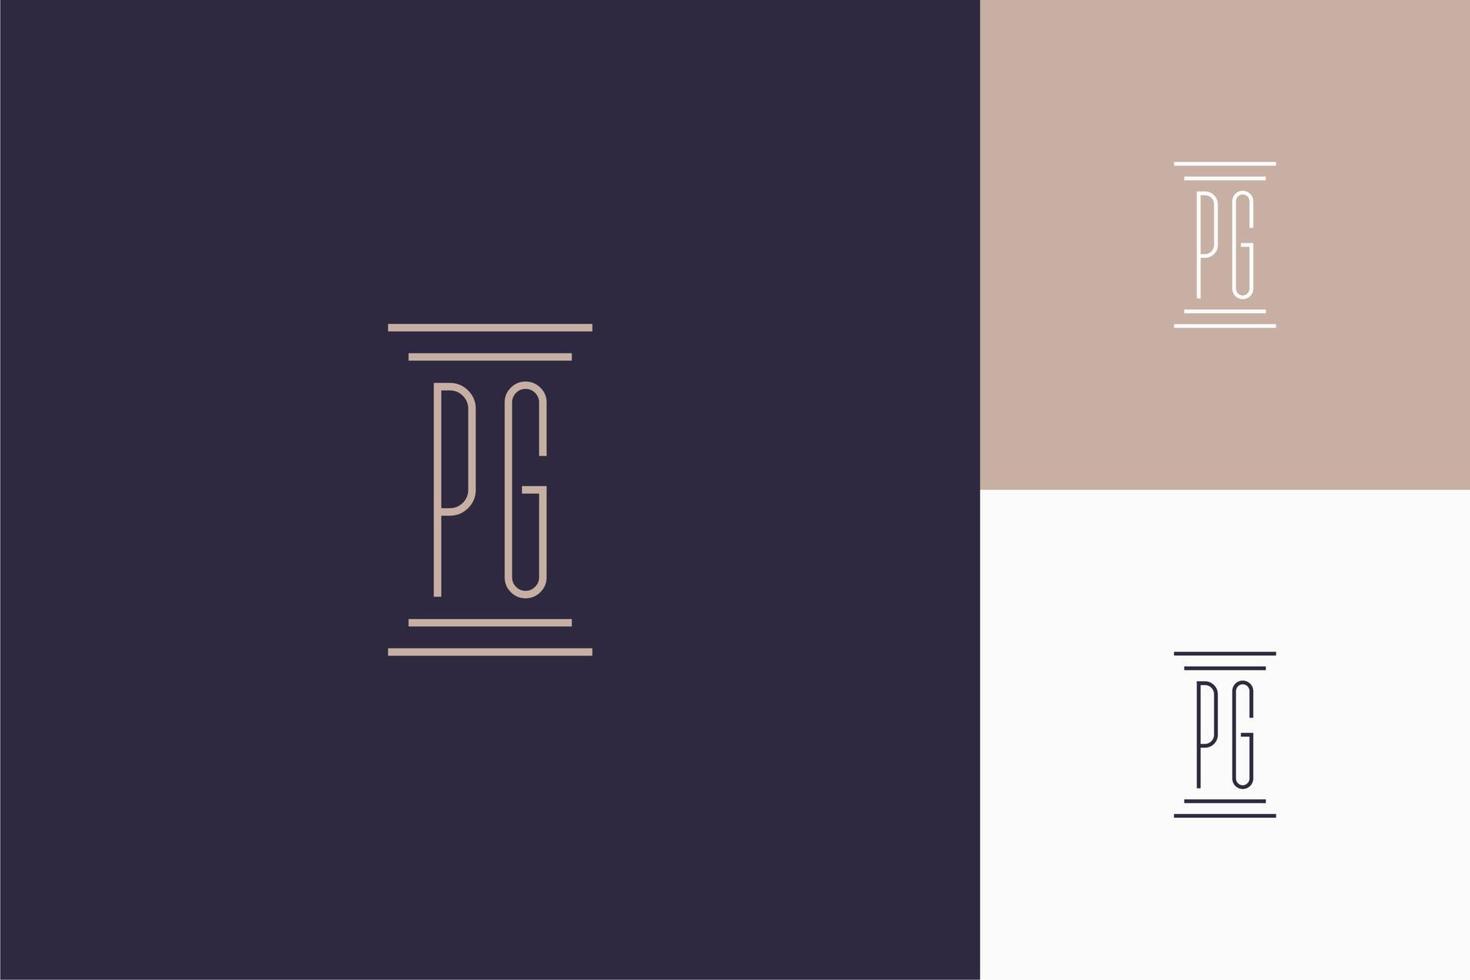 PG monogram initials design for law firm logo vector